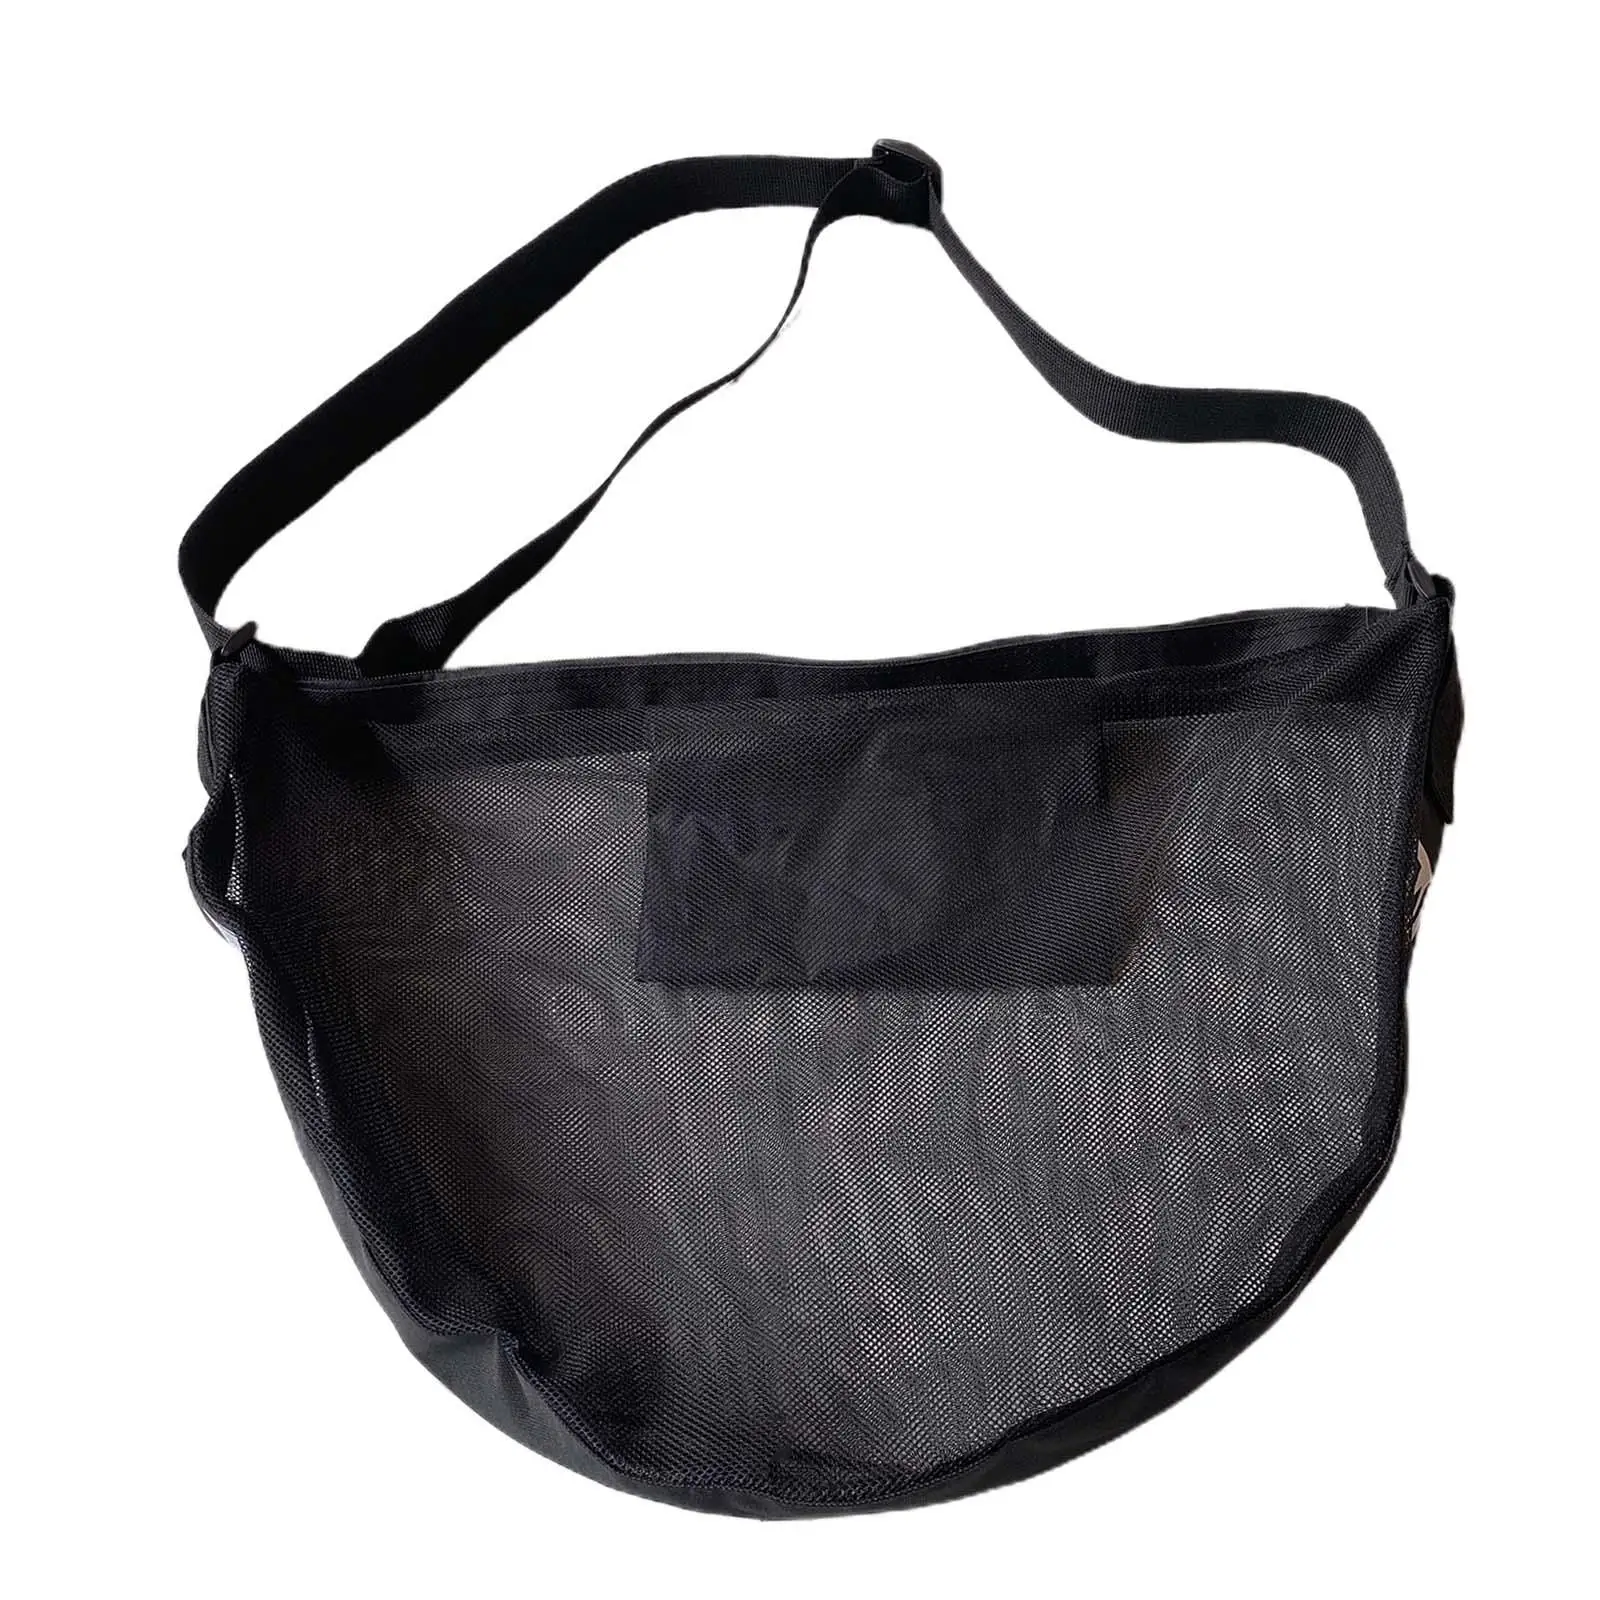 Ball Bags Mesh Lightweight Storage Softball Soccer Basketball Carry Bag